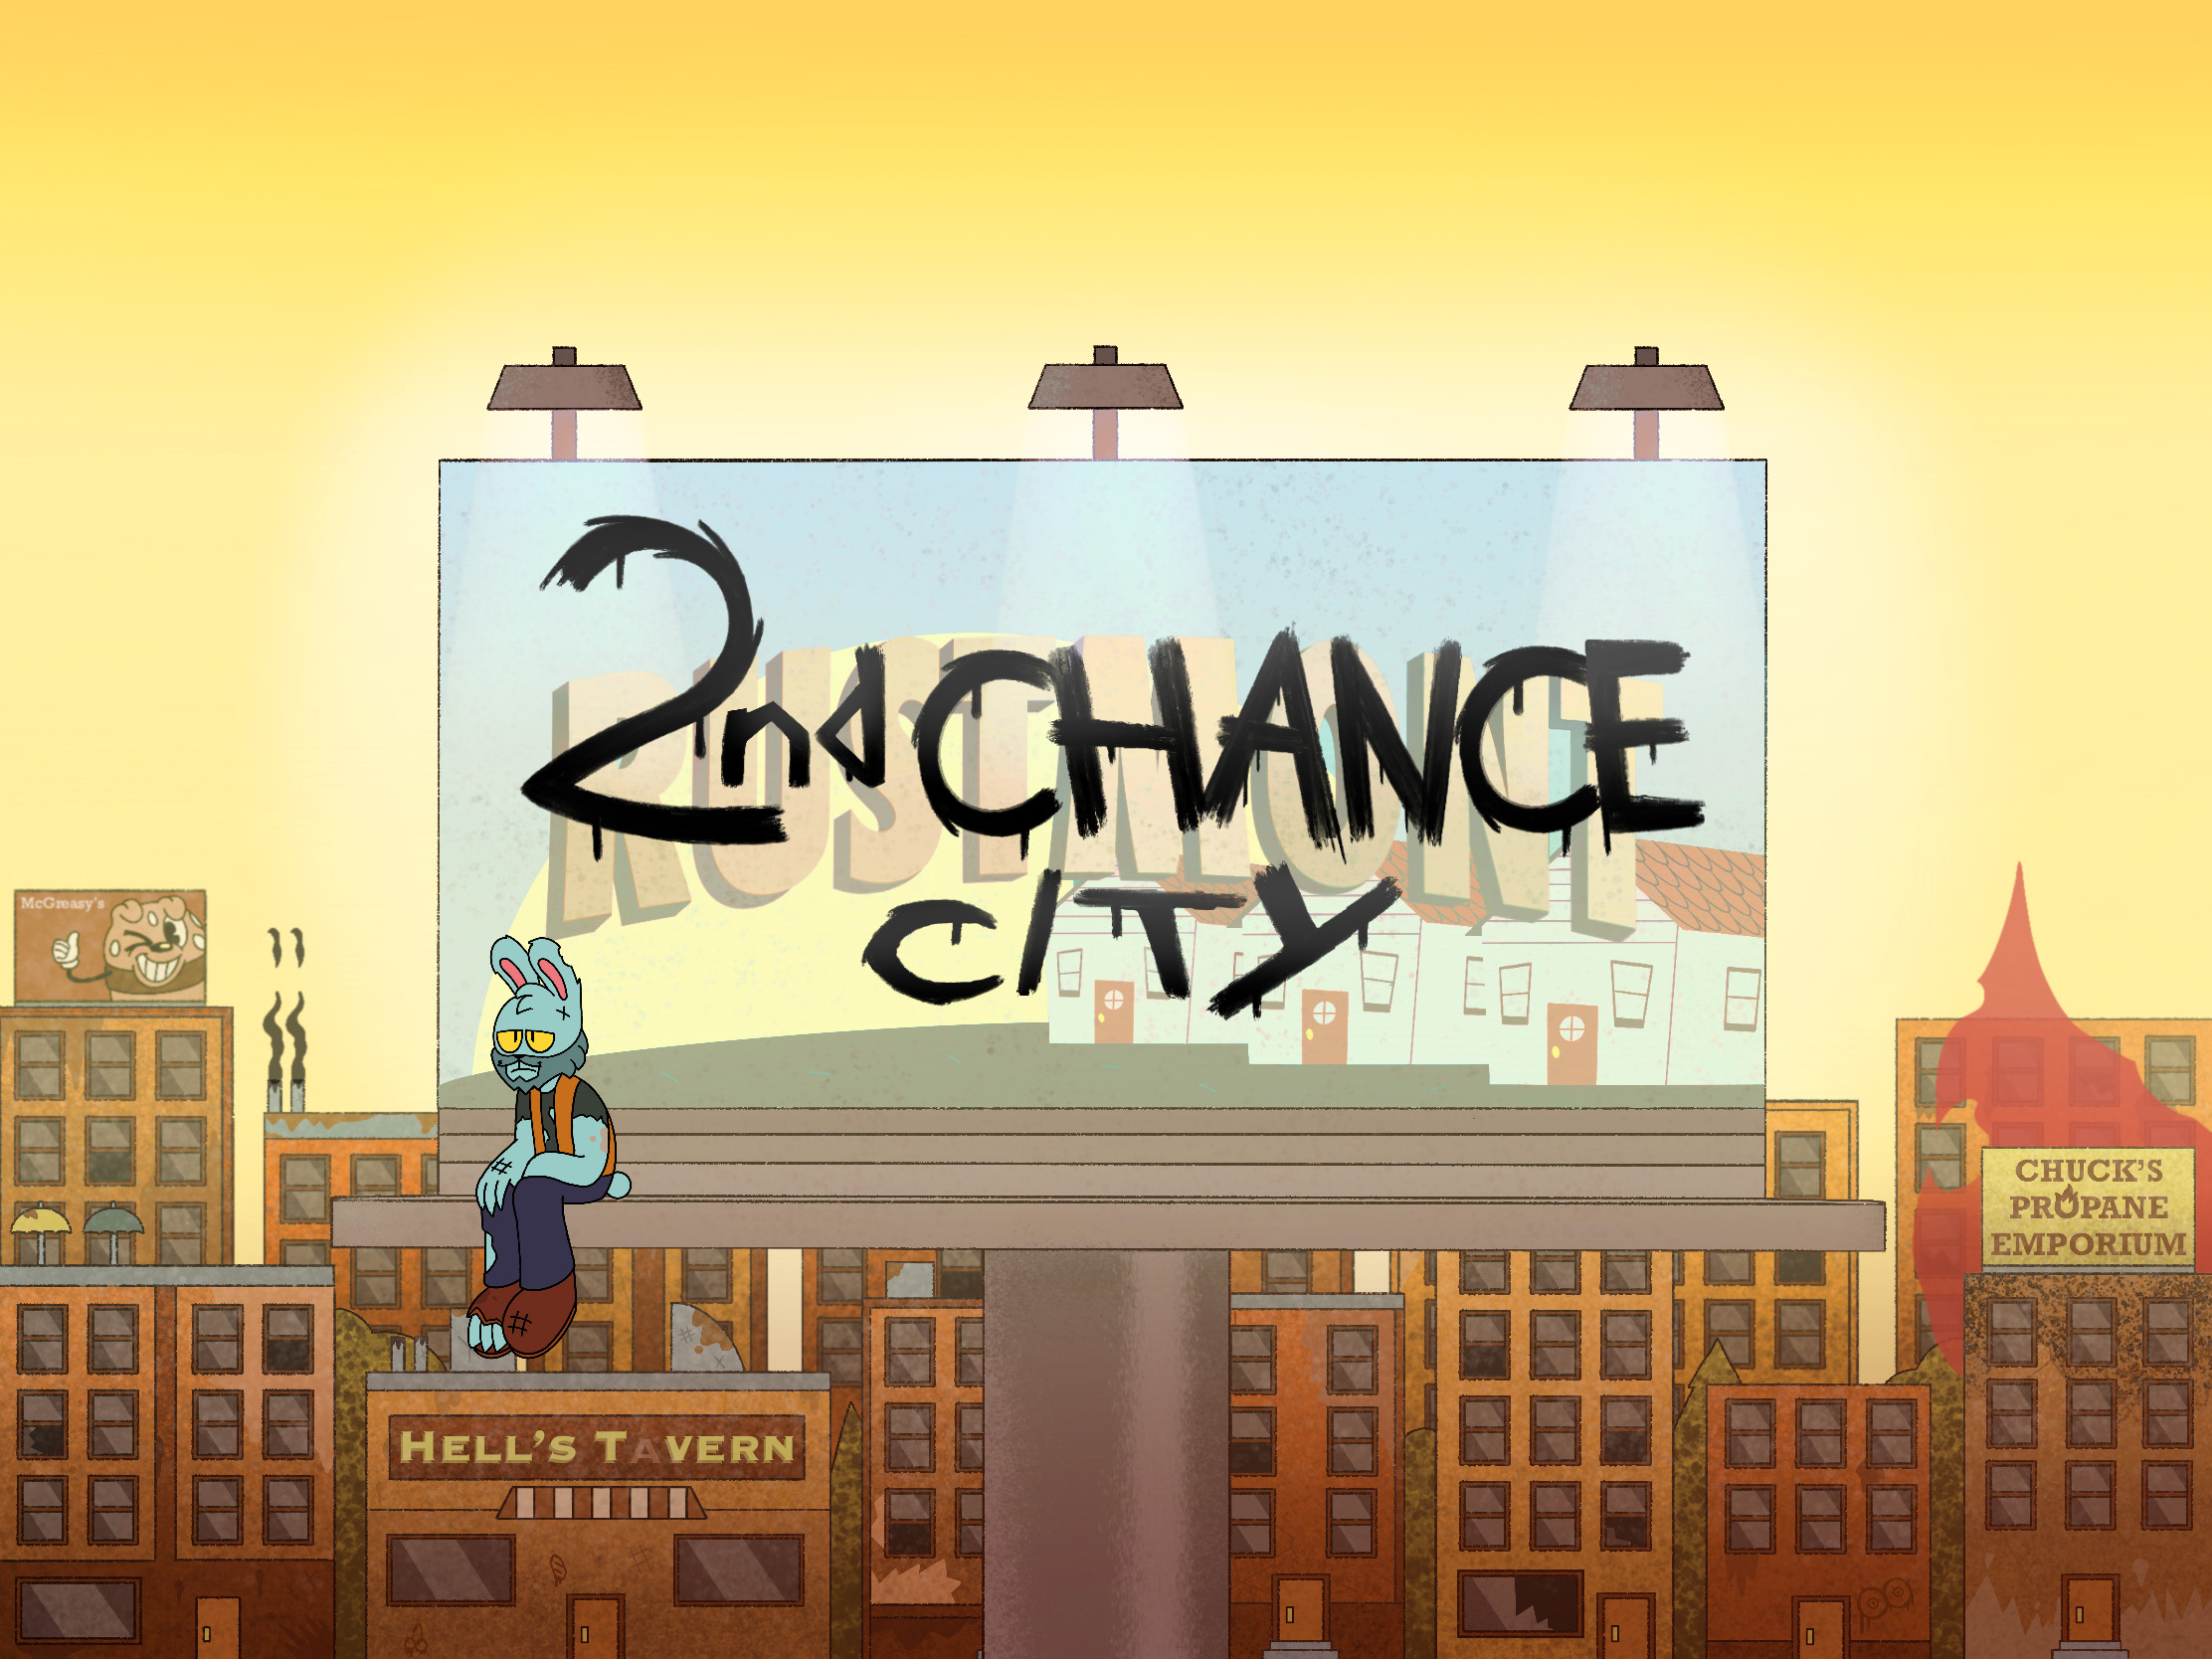 Second Chance City